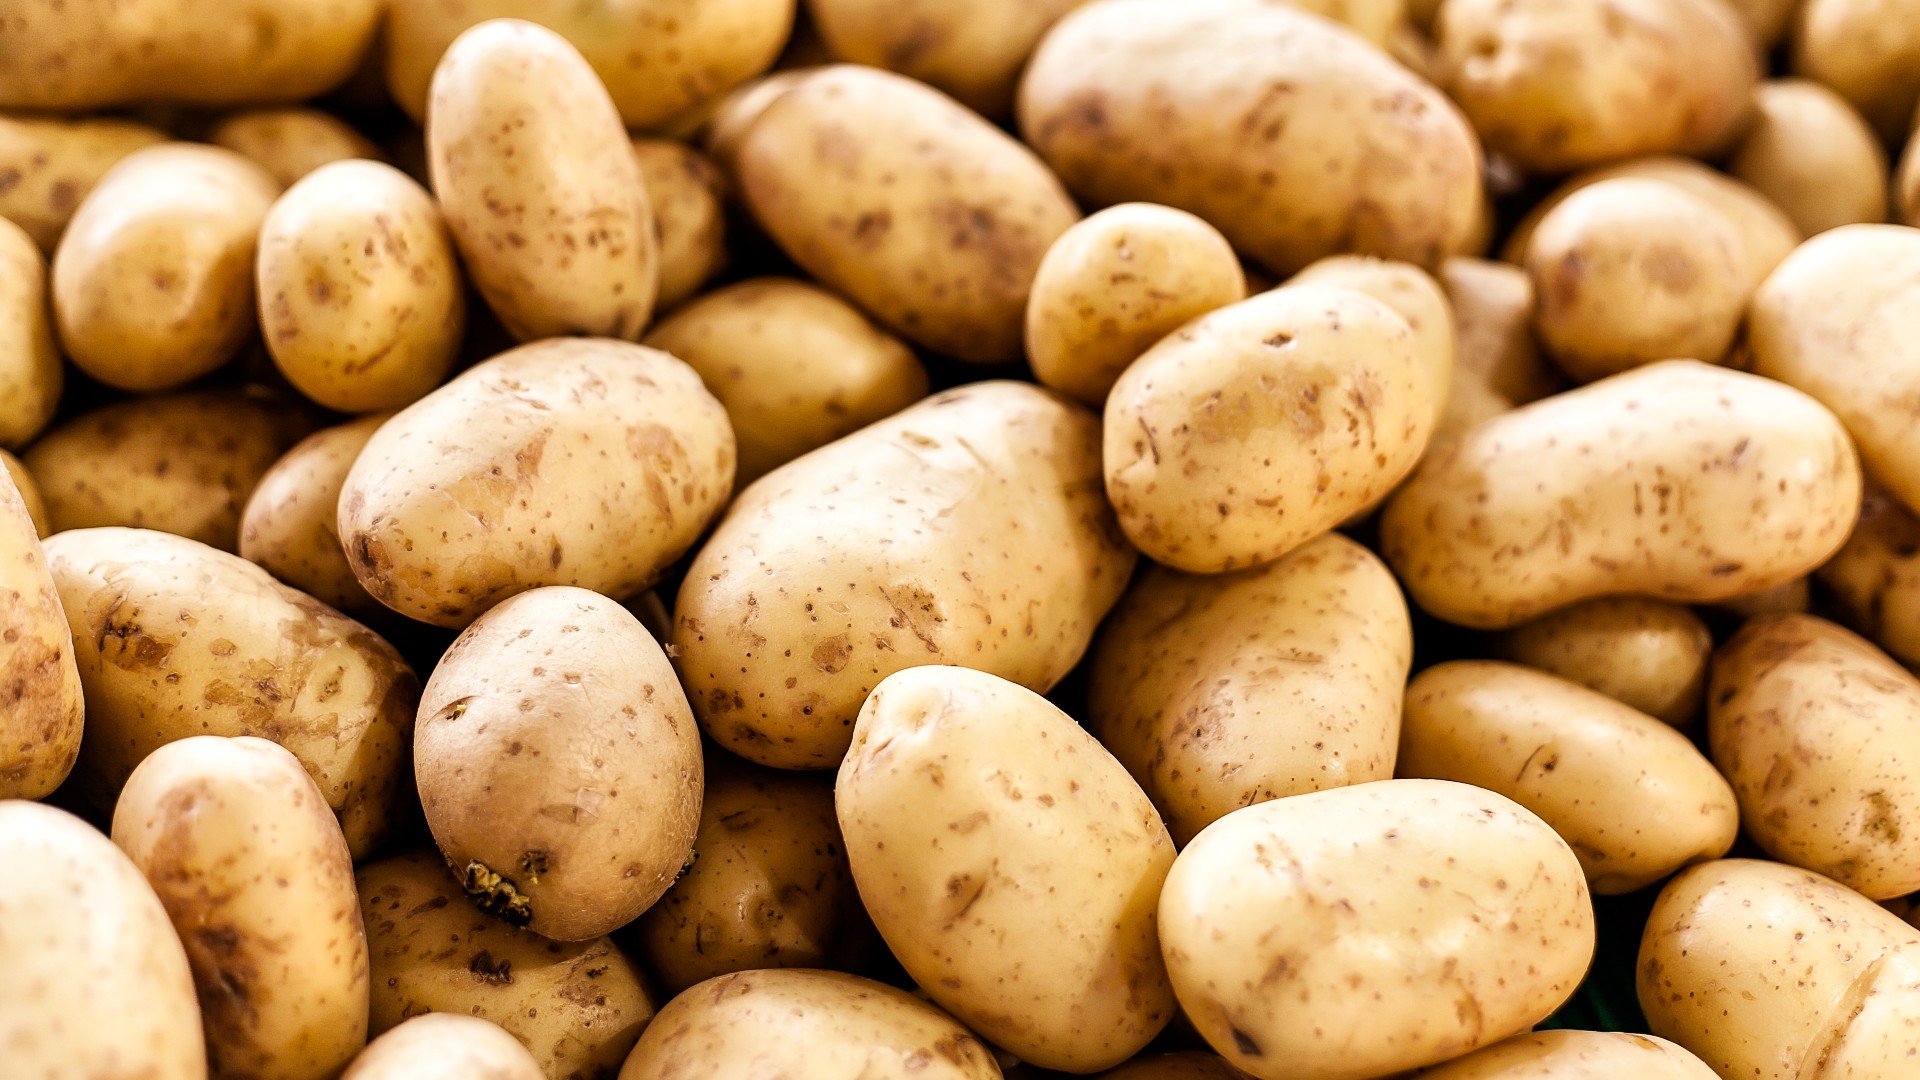 Potato nutrition facts & health benefits | Live Science